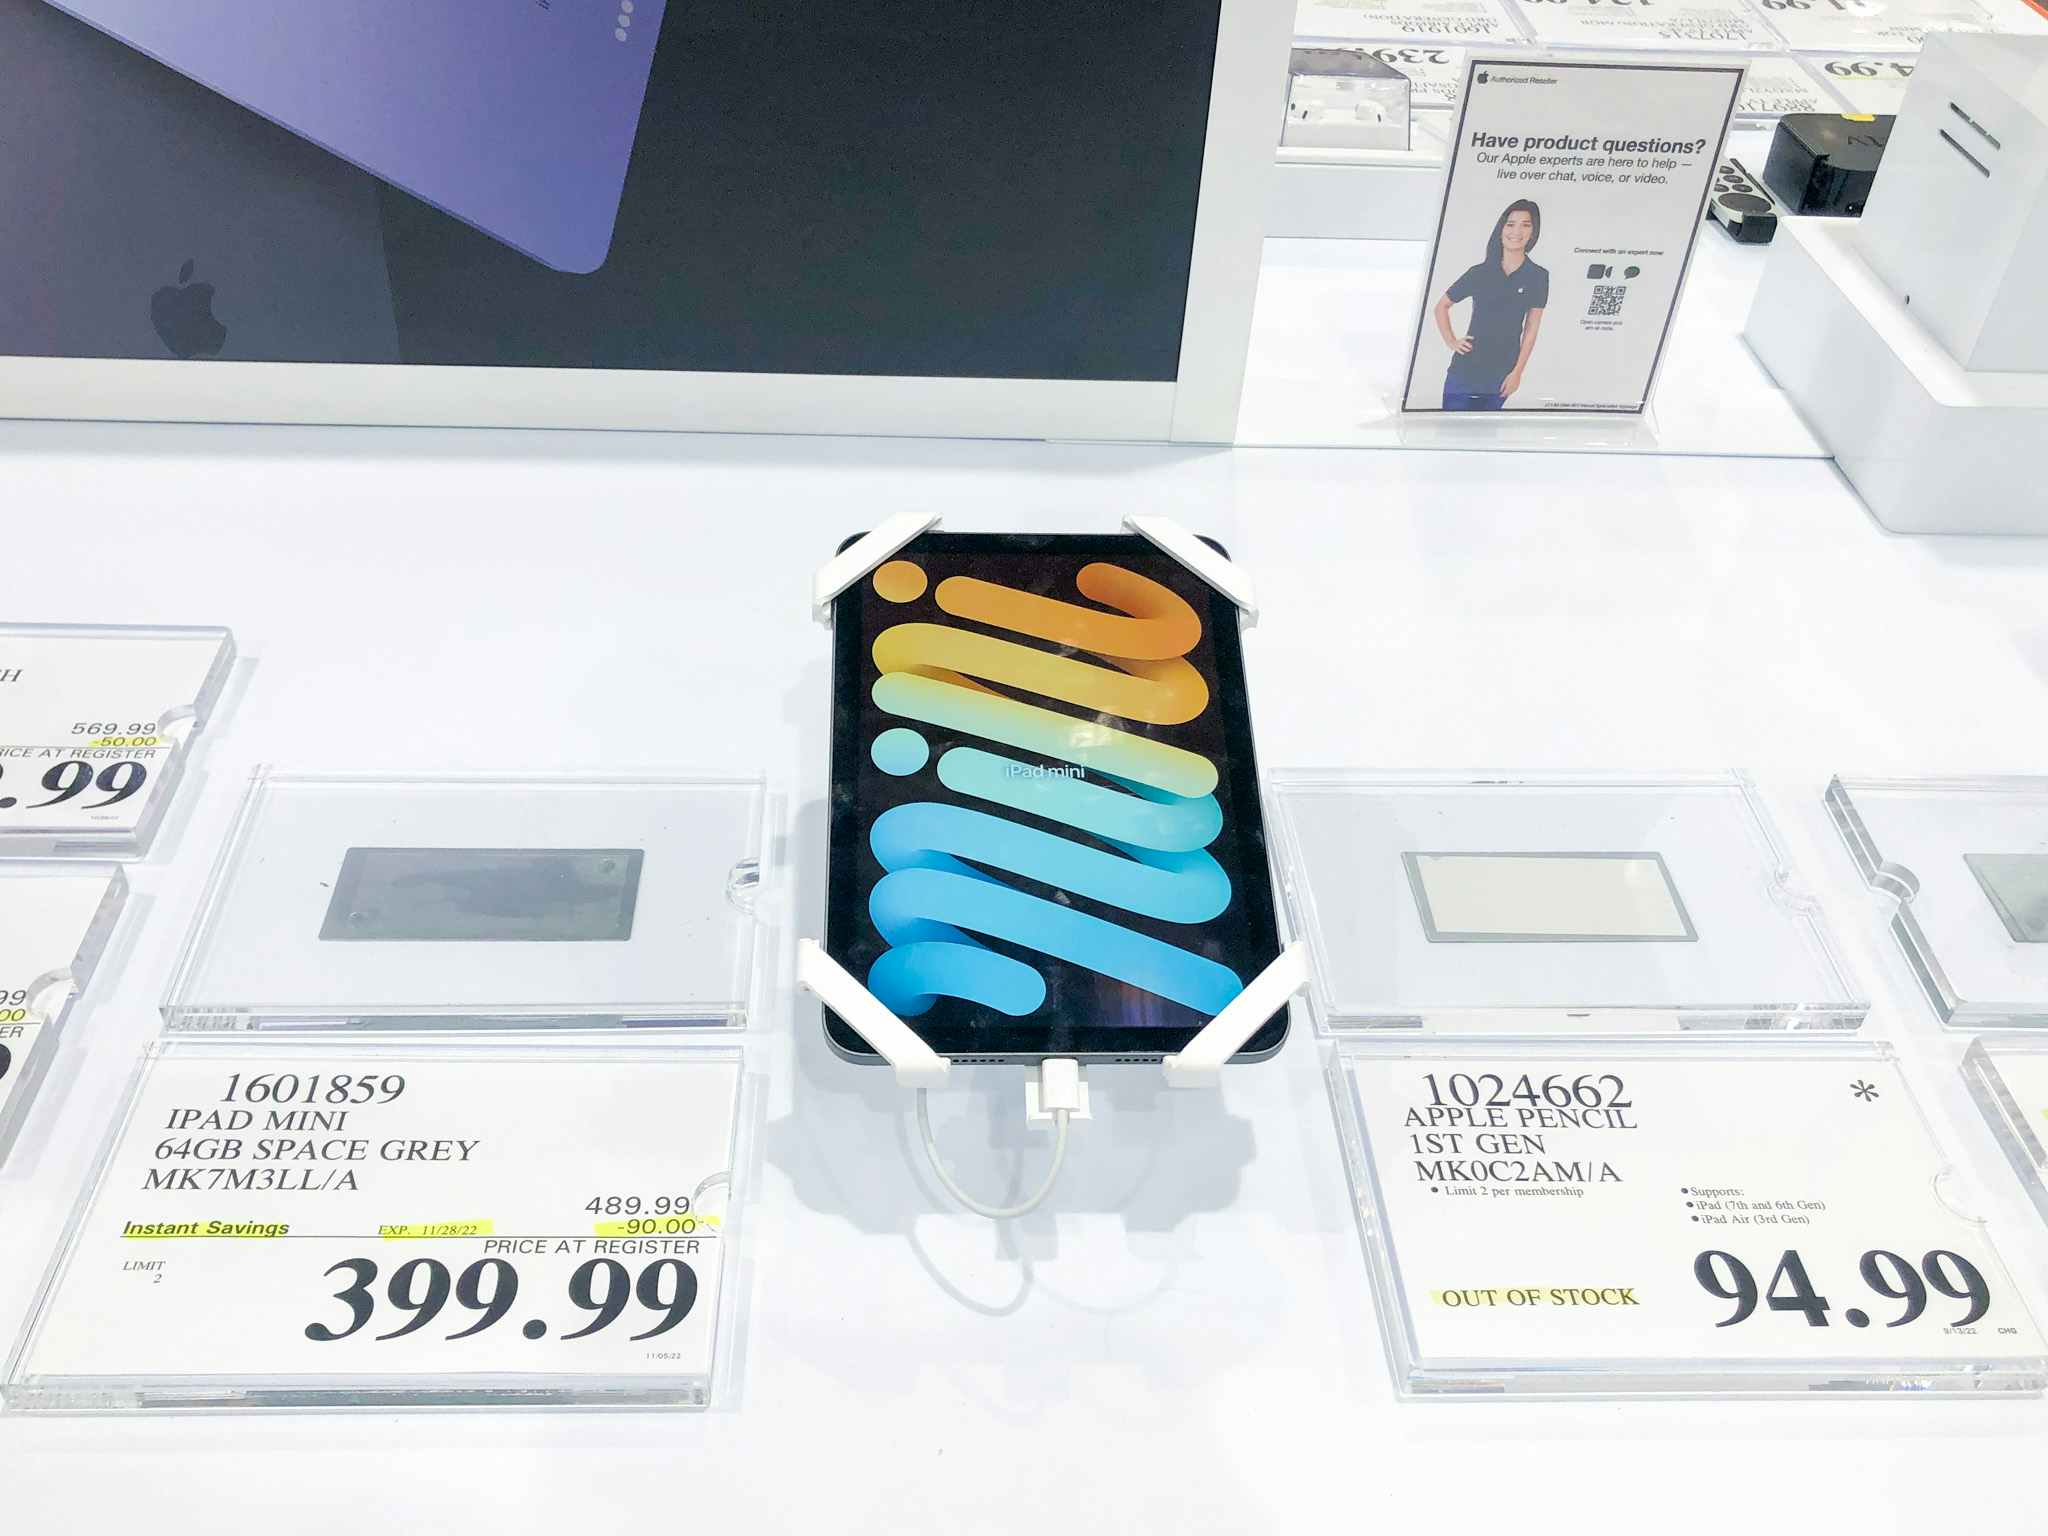 ipad mini display with prices in costco